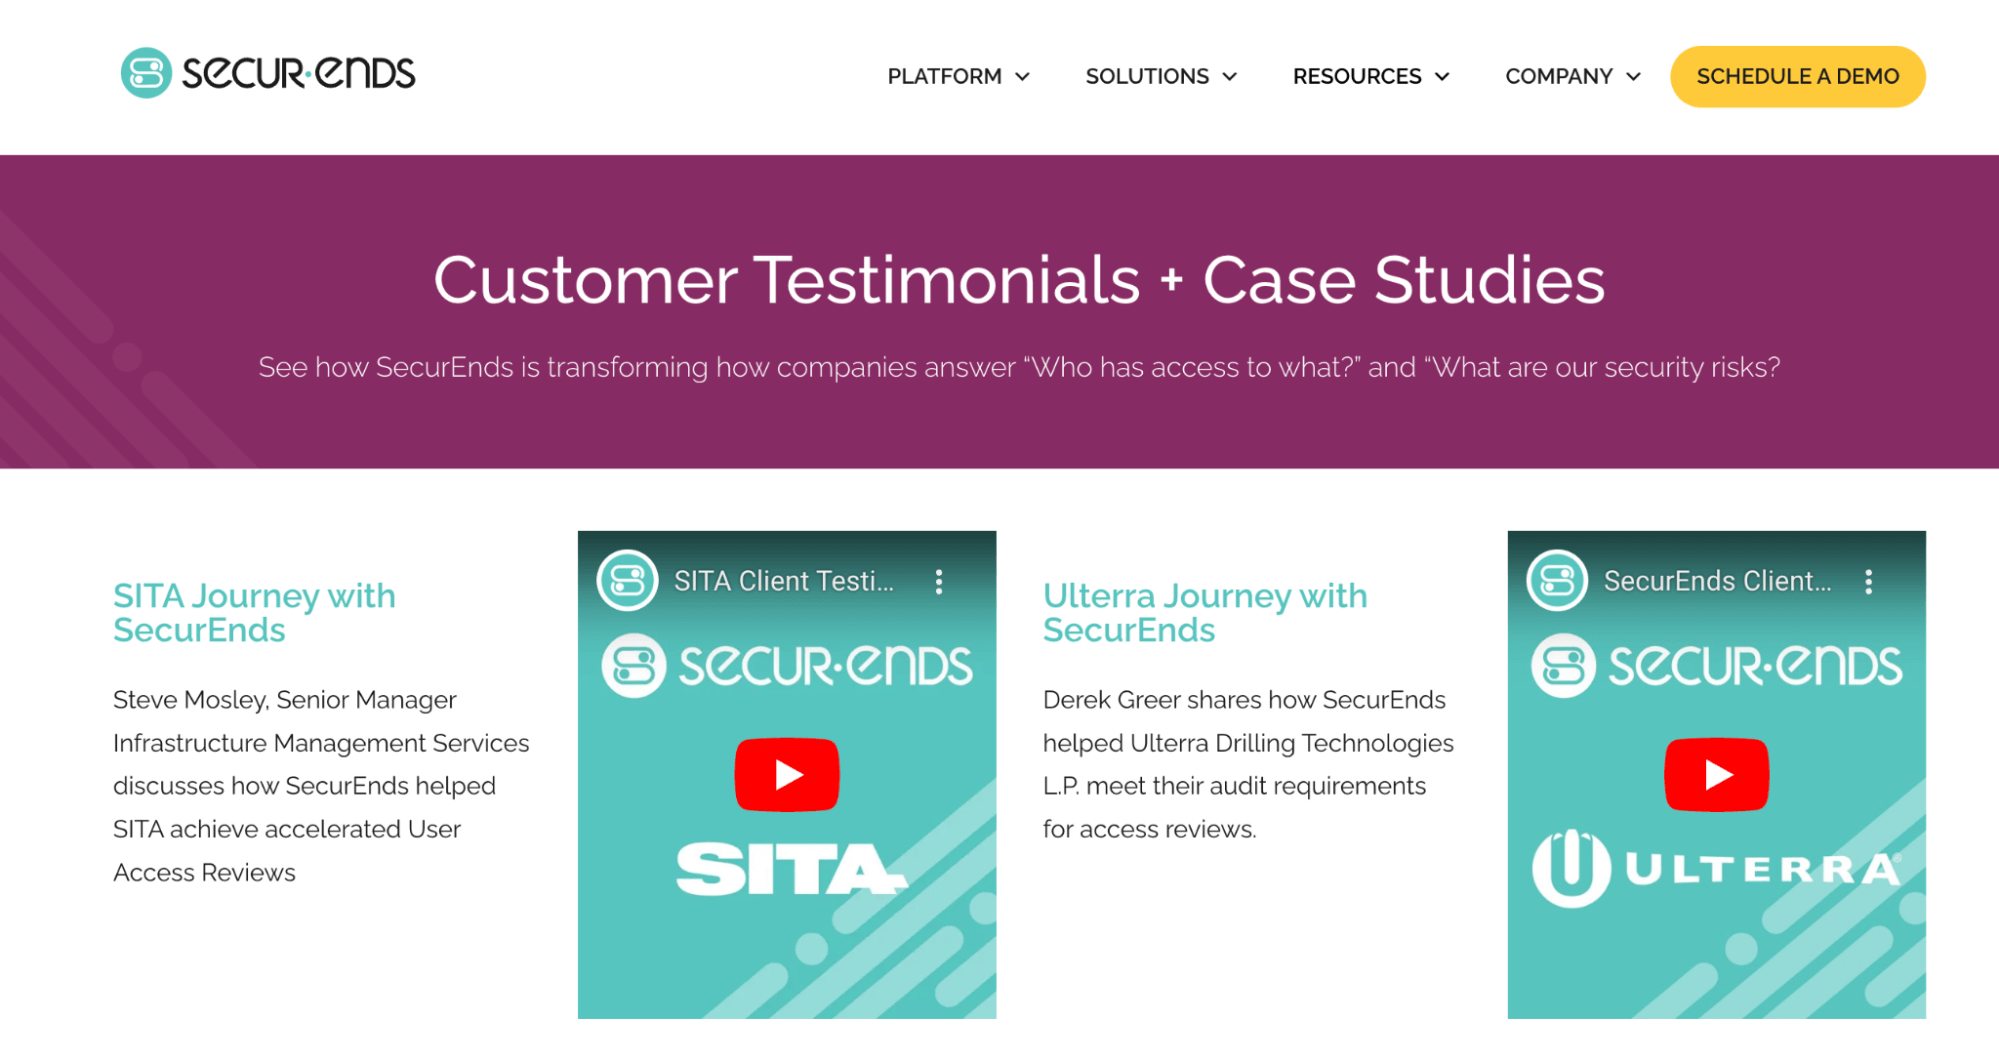 SecurEnds customer testimonials and case studies